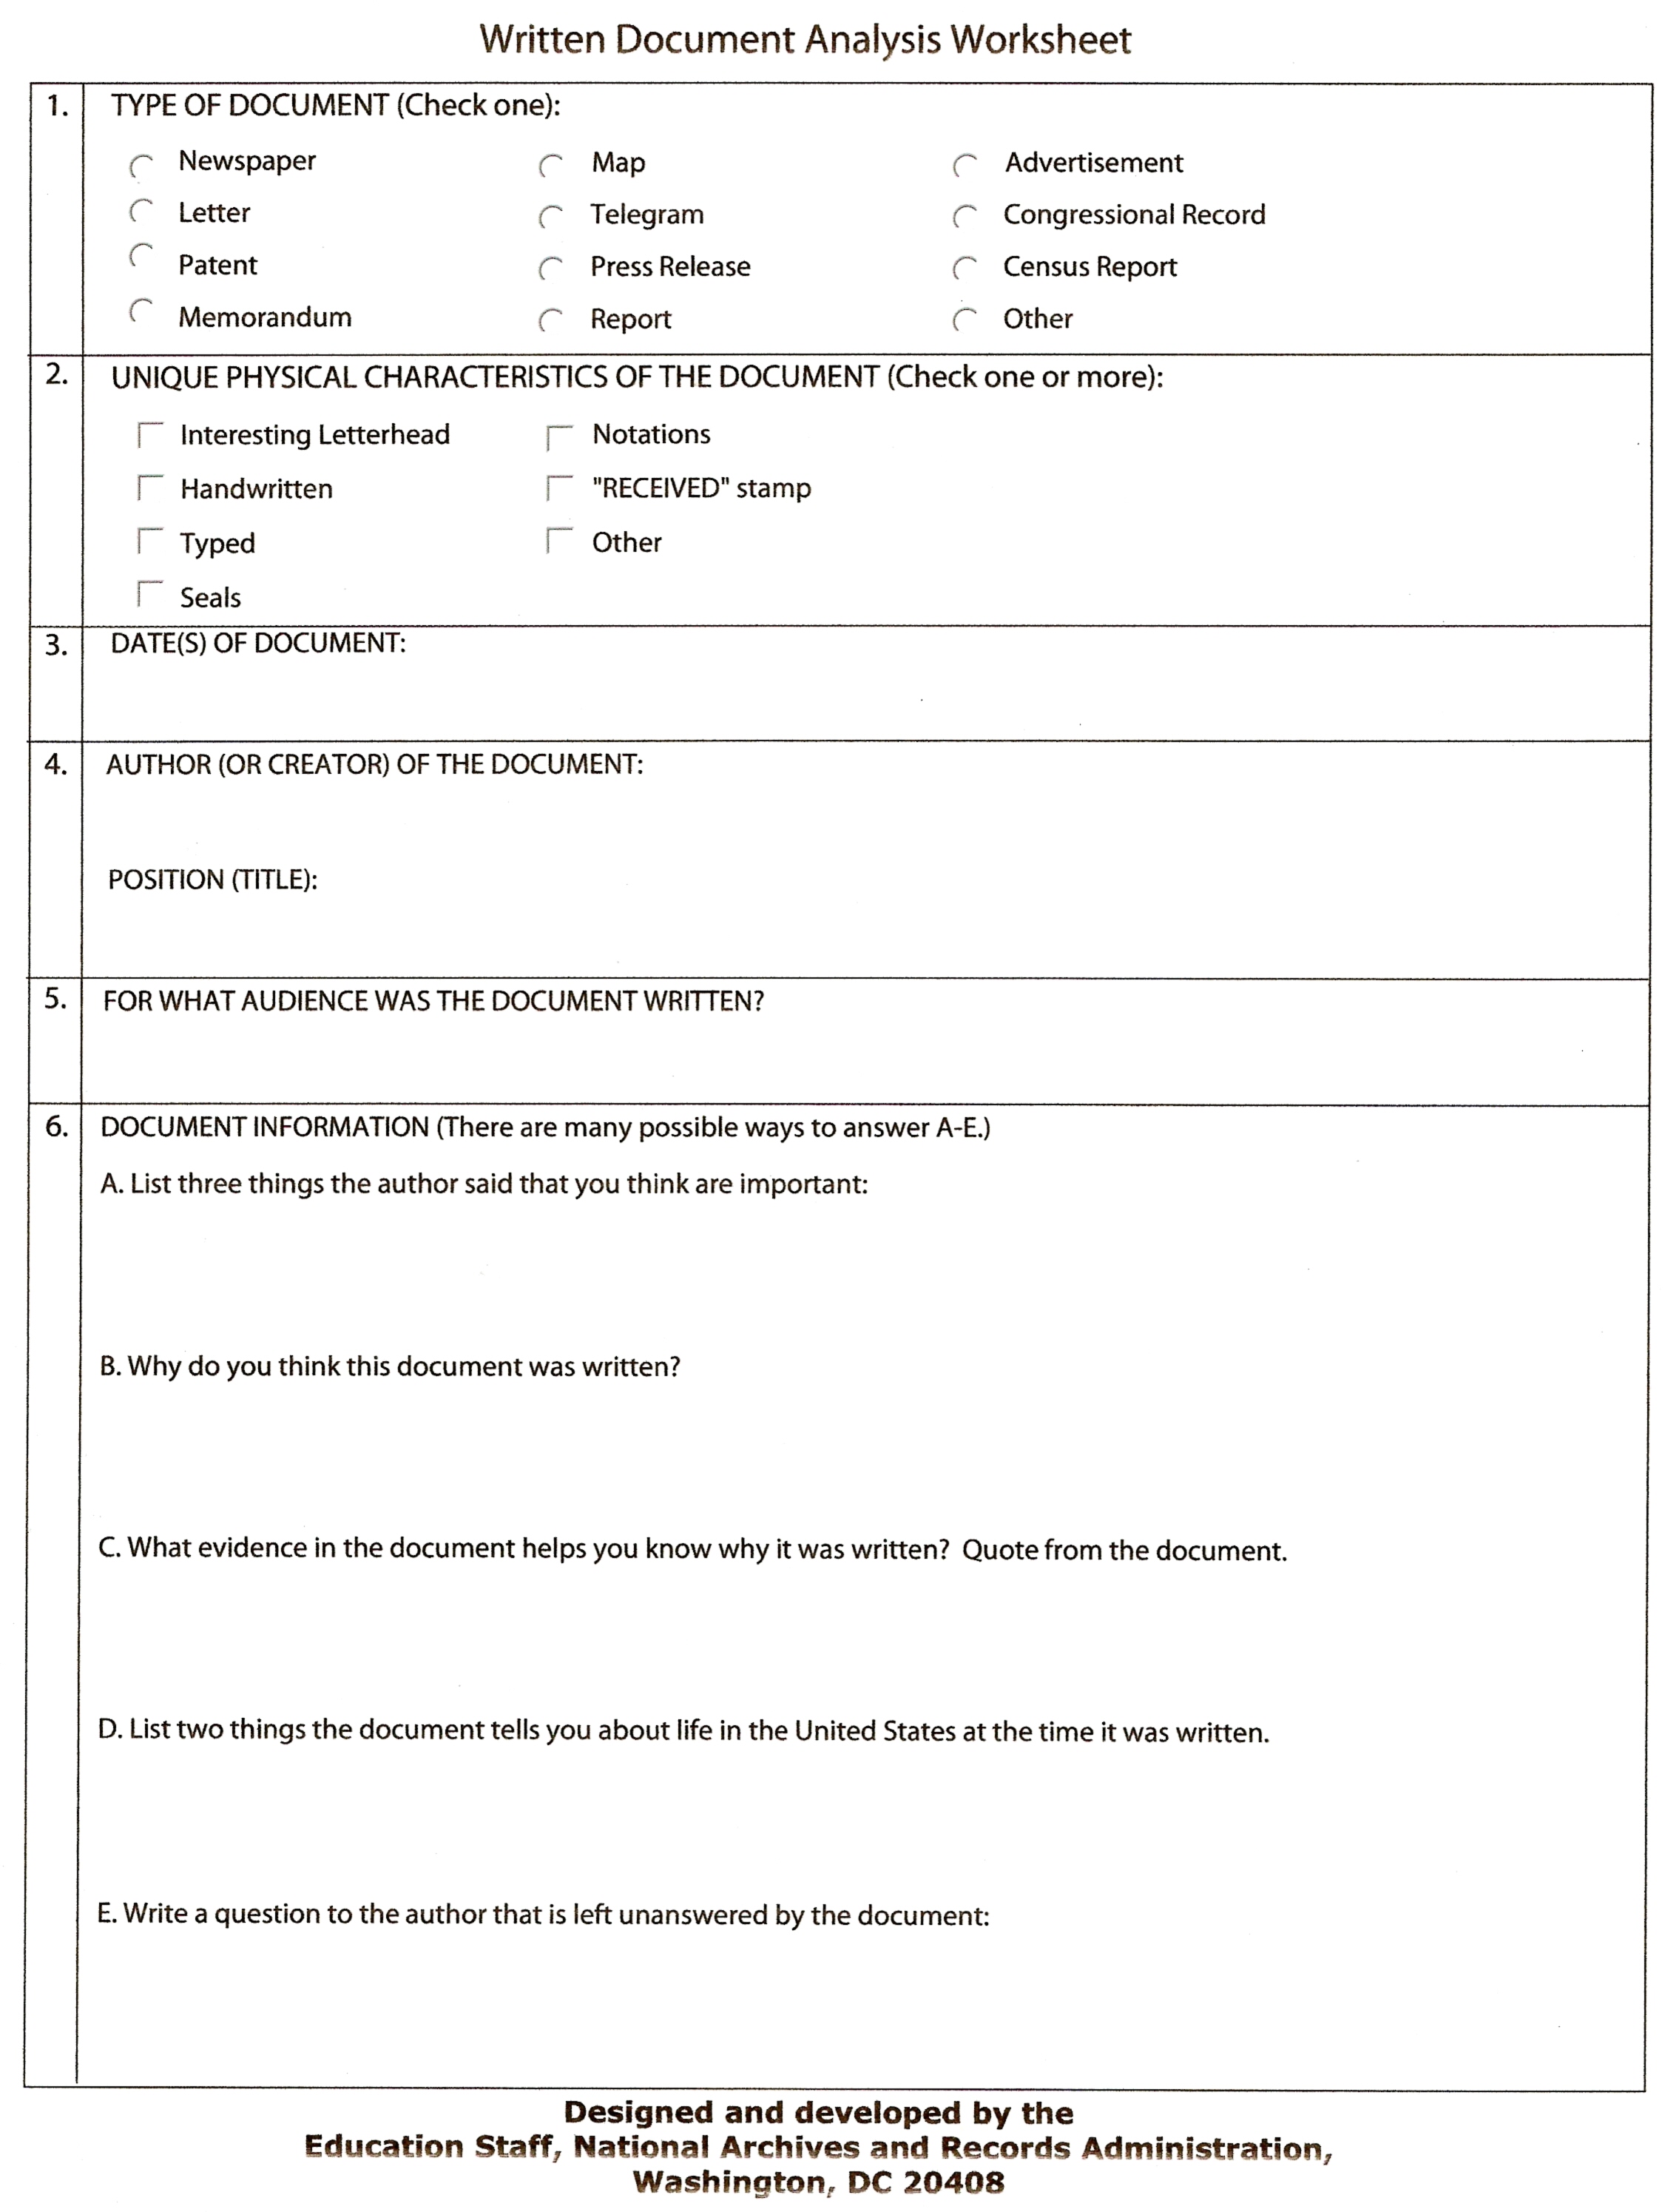 Written Document Analysis Worksheet Answers